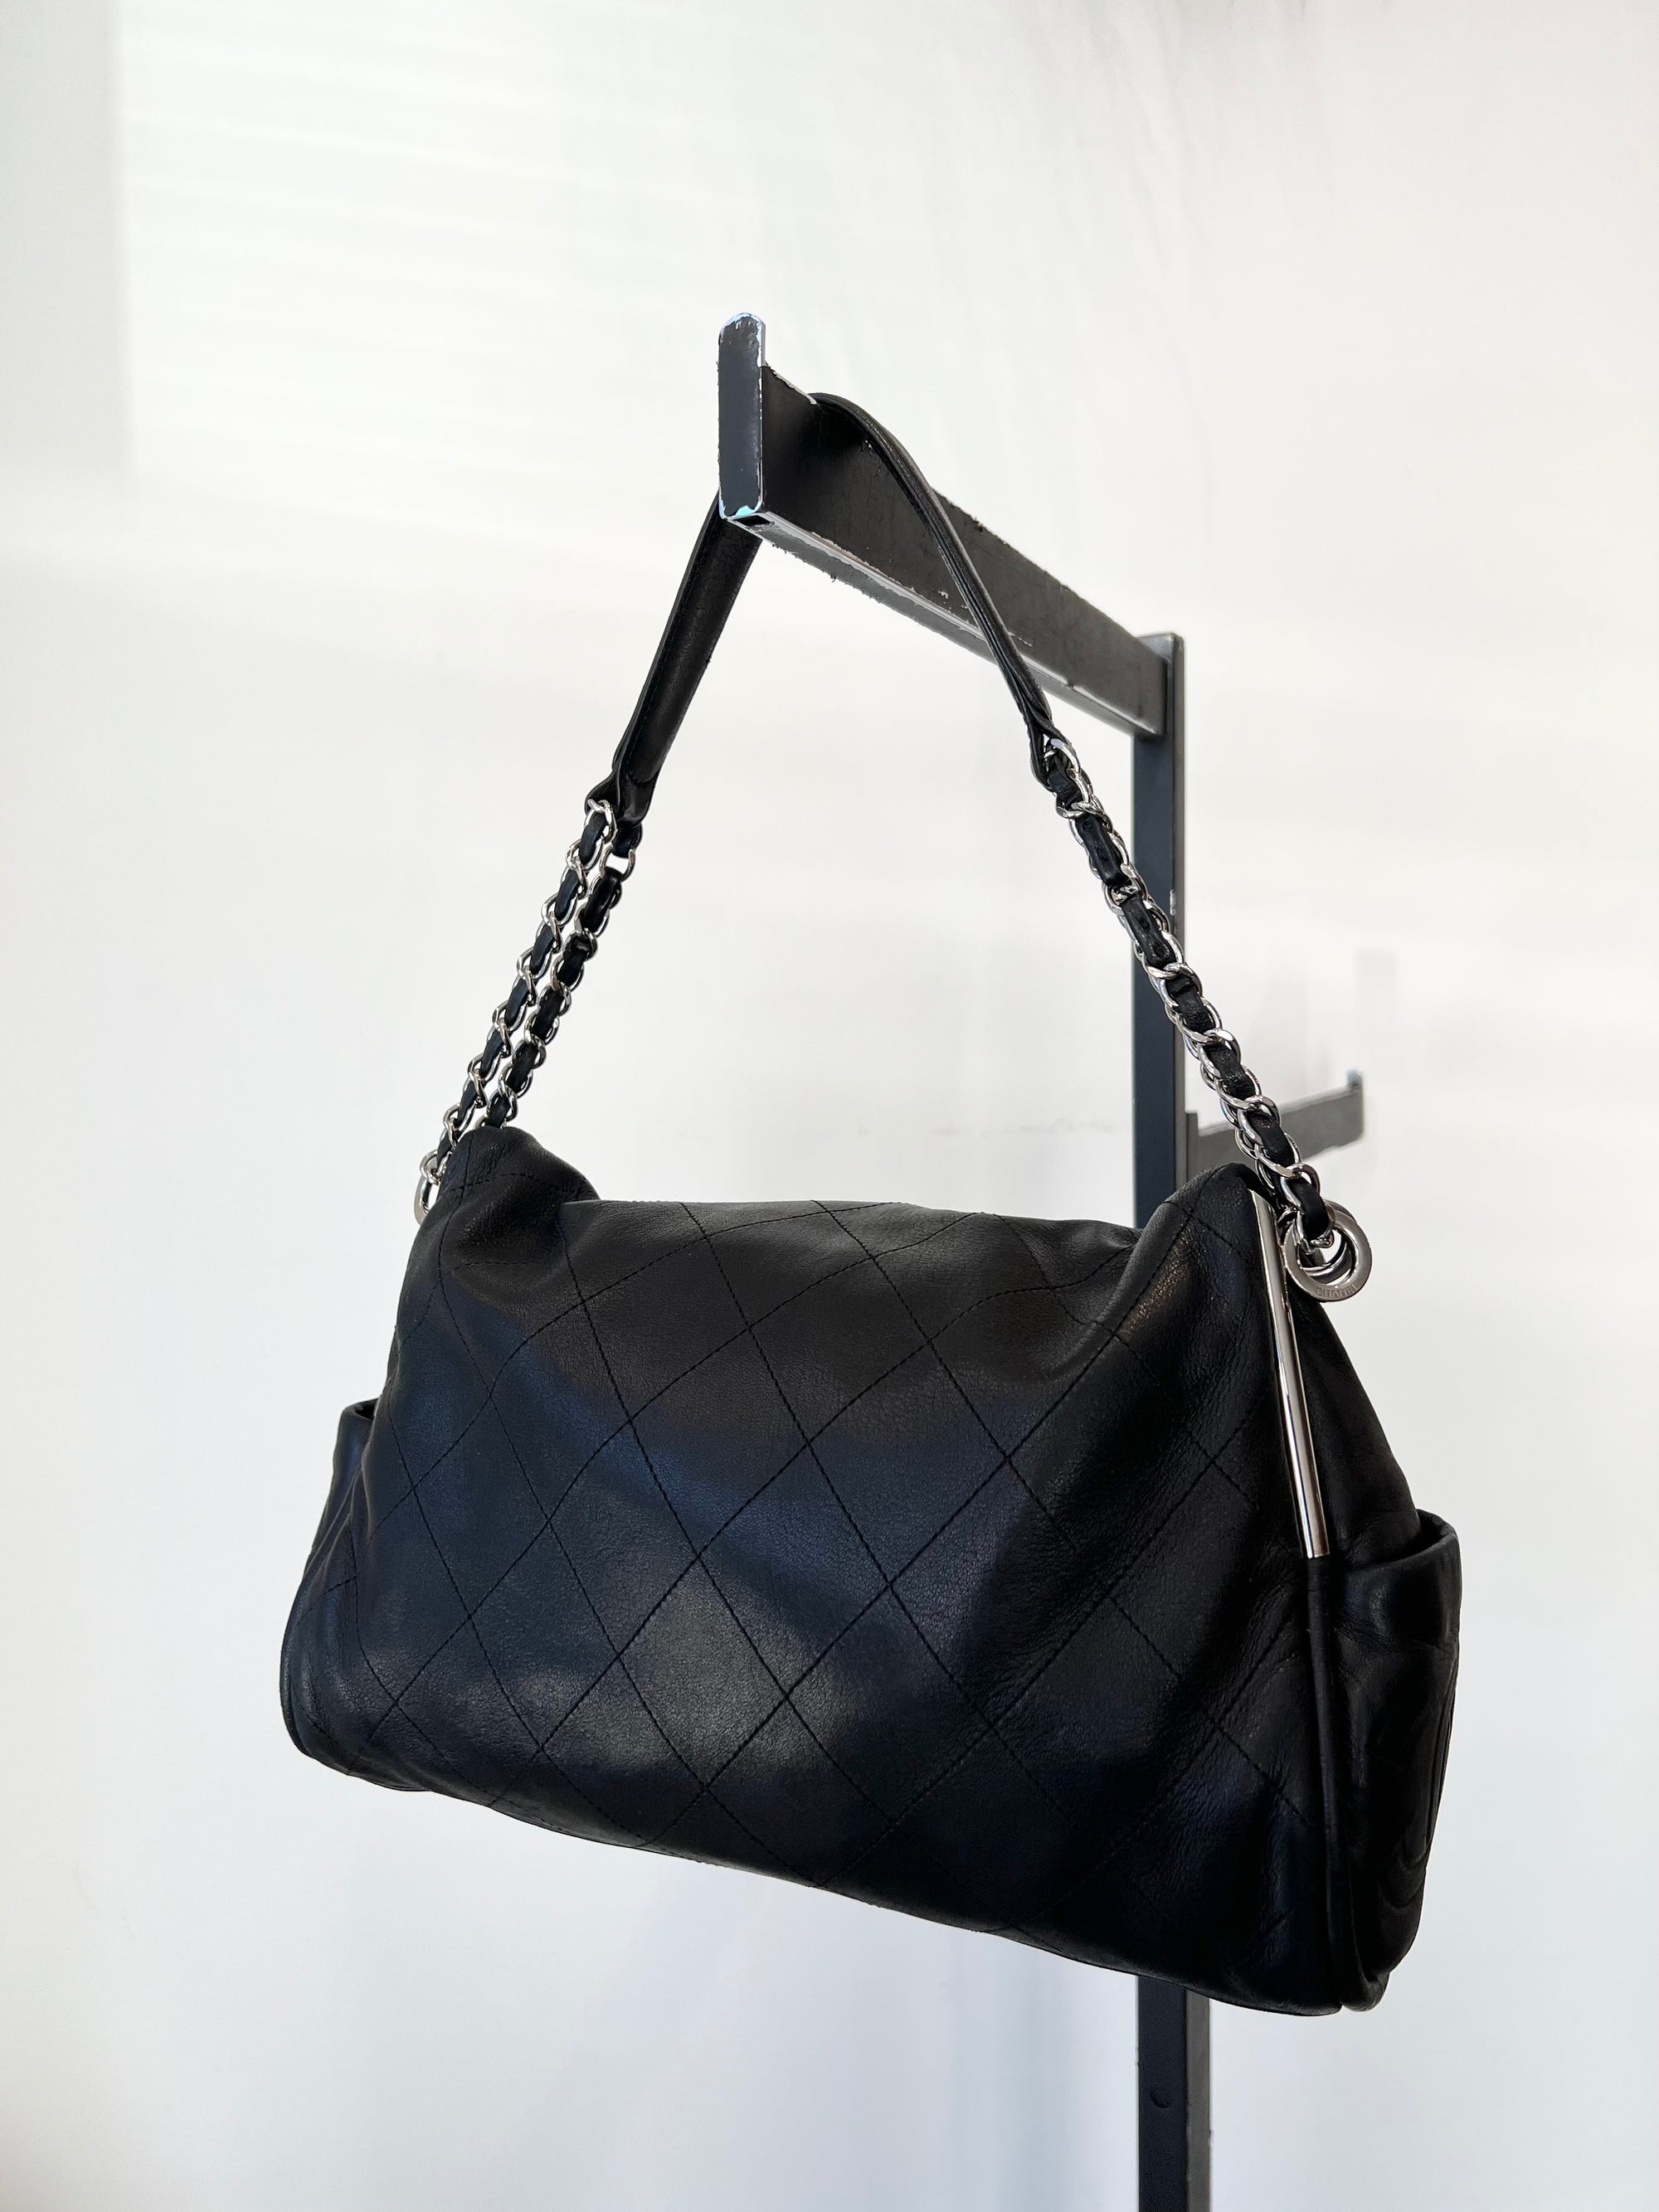 Chanel Lambskin Shoulder Handbag Black